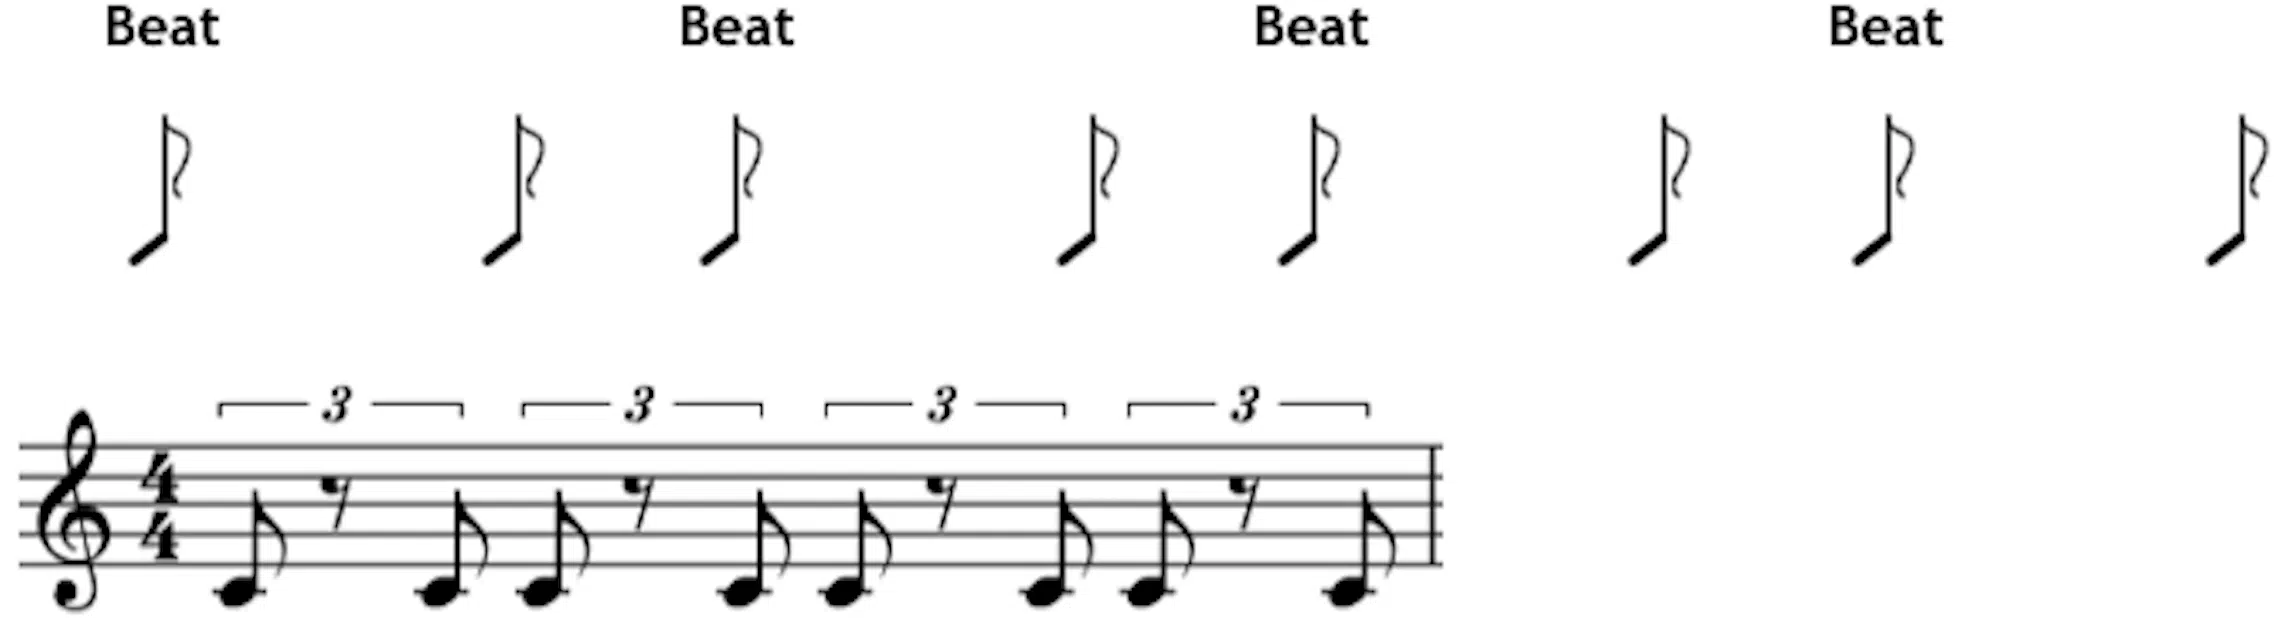 Straight Rhythm - Unison